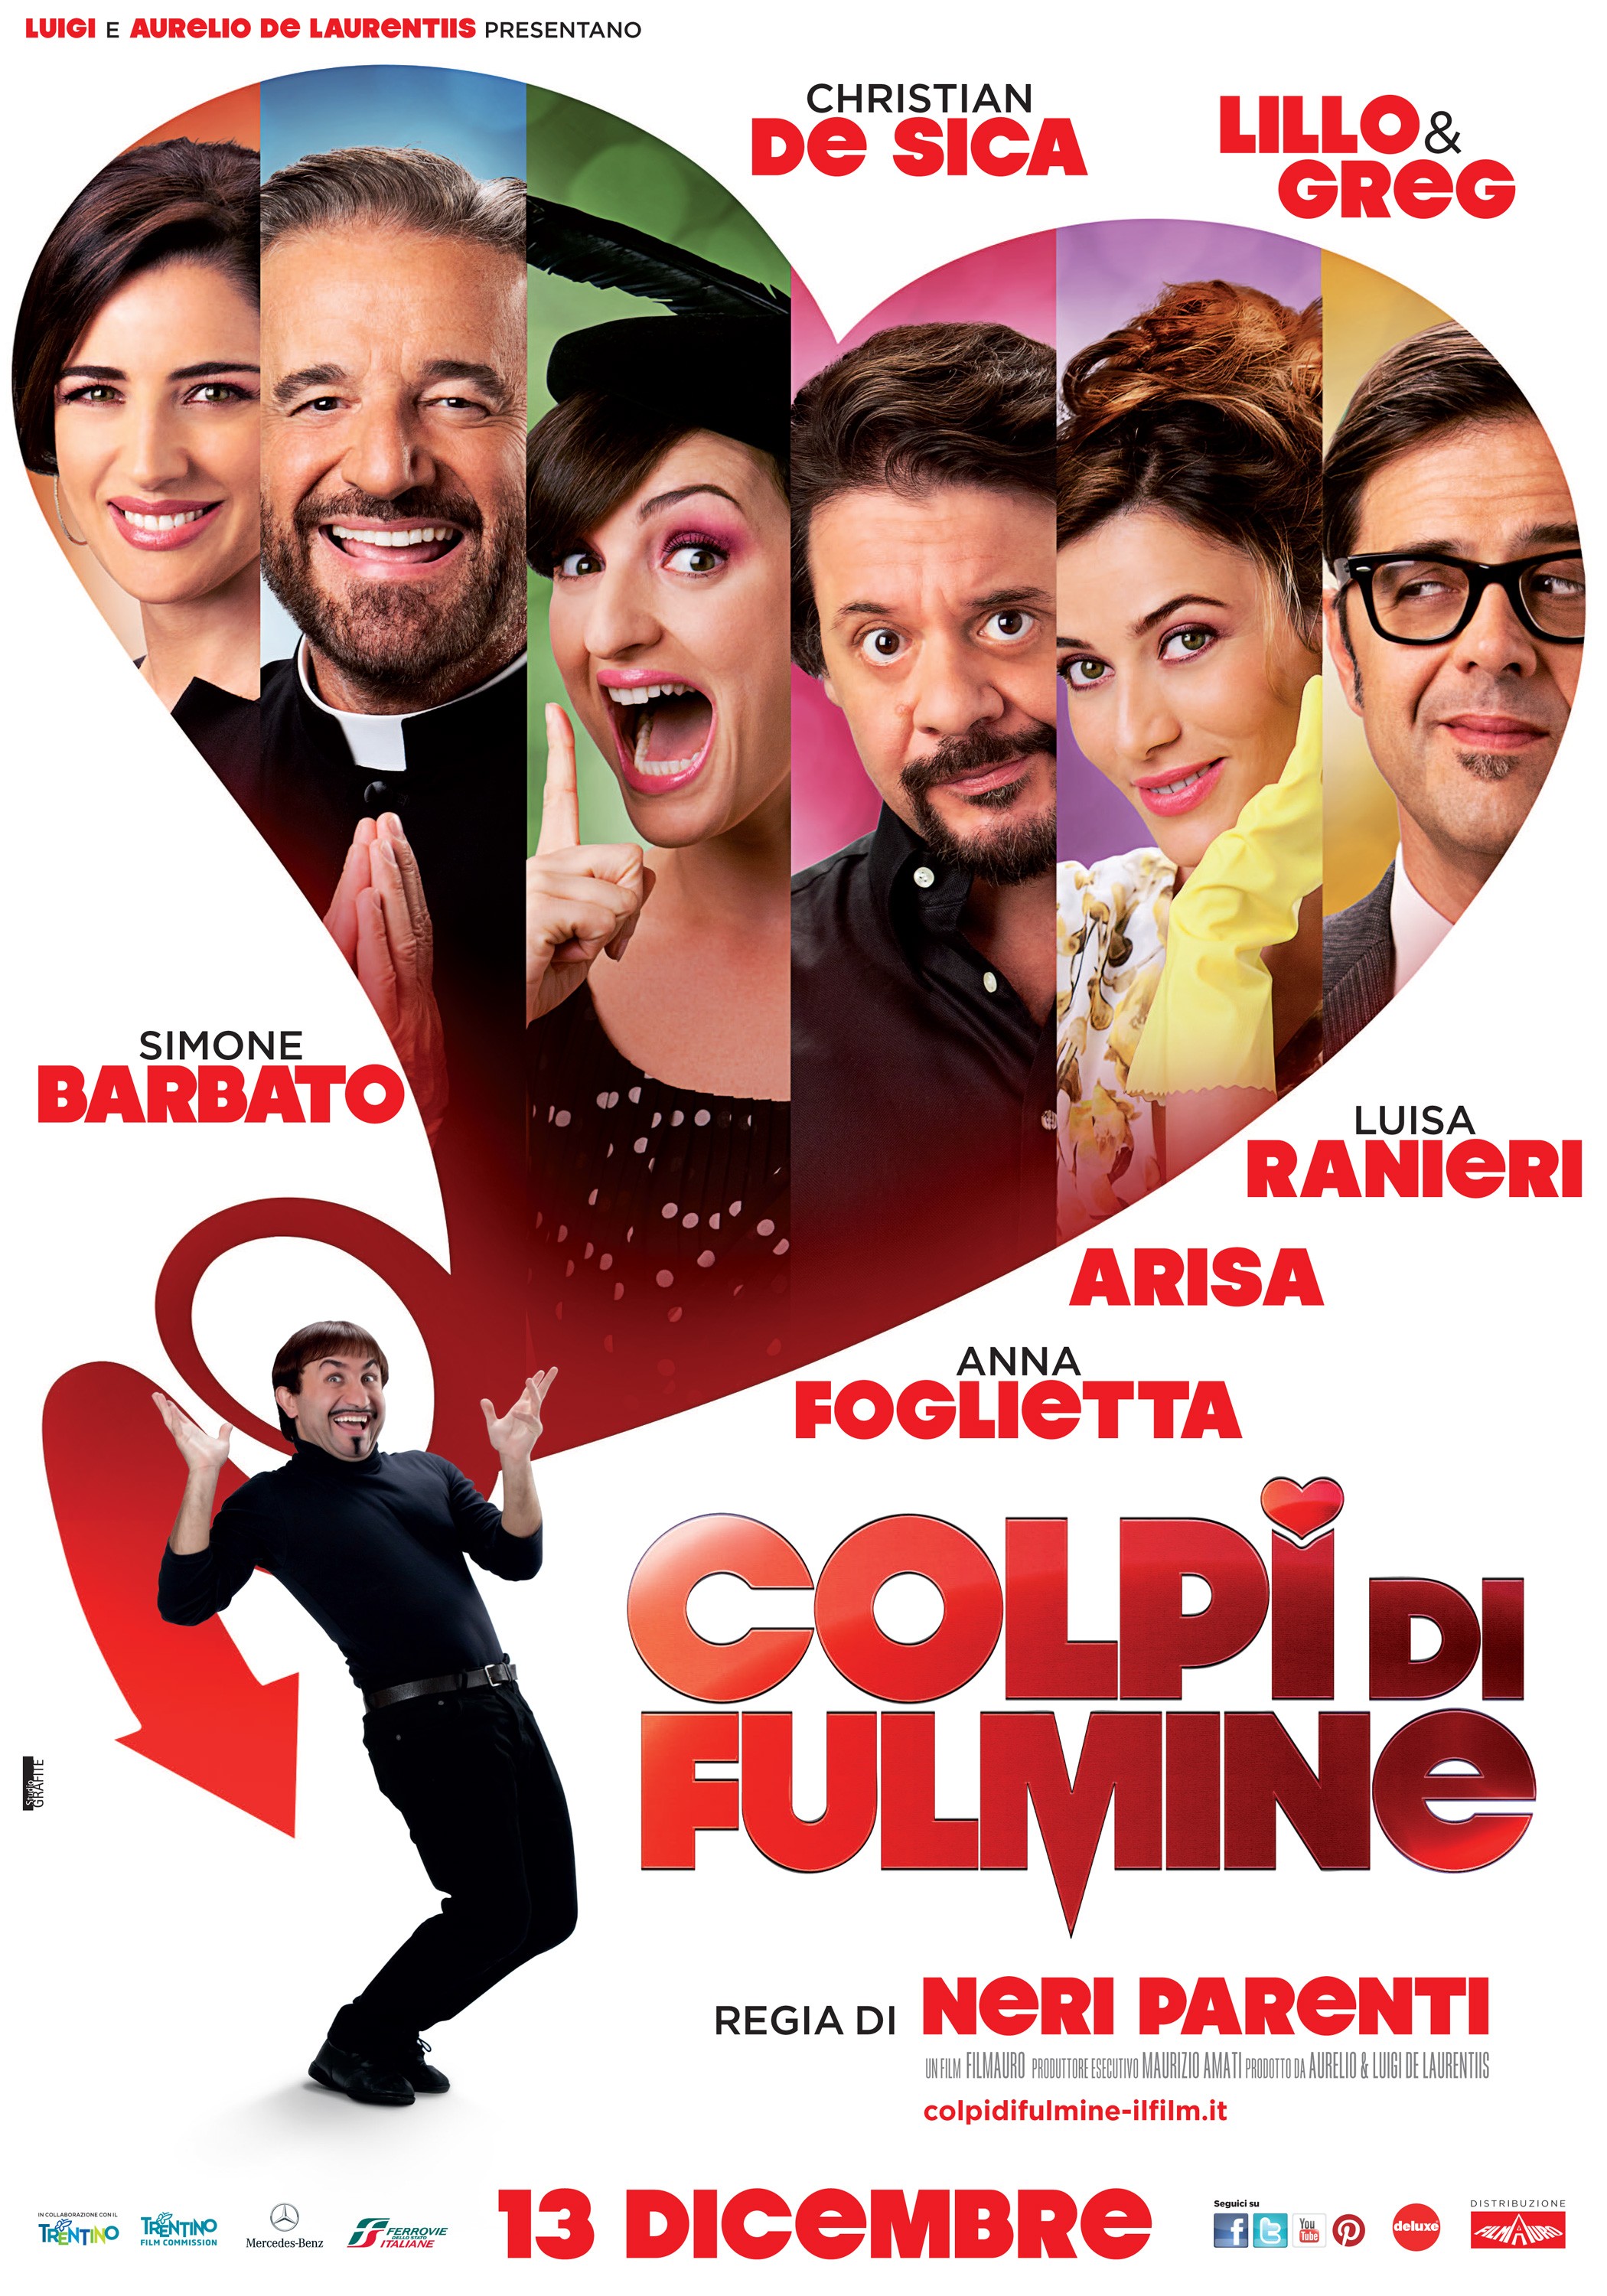 Mega Sized Movie Poster Image for Colpi di fulmine 